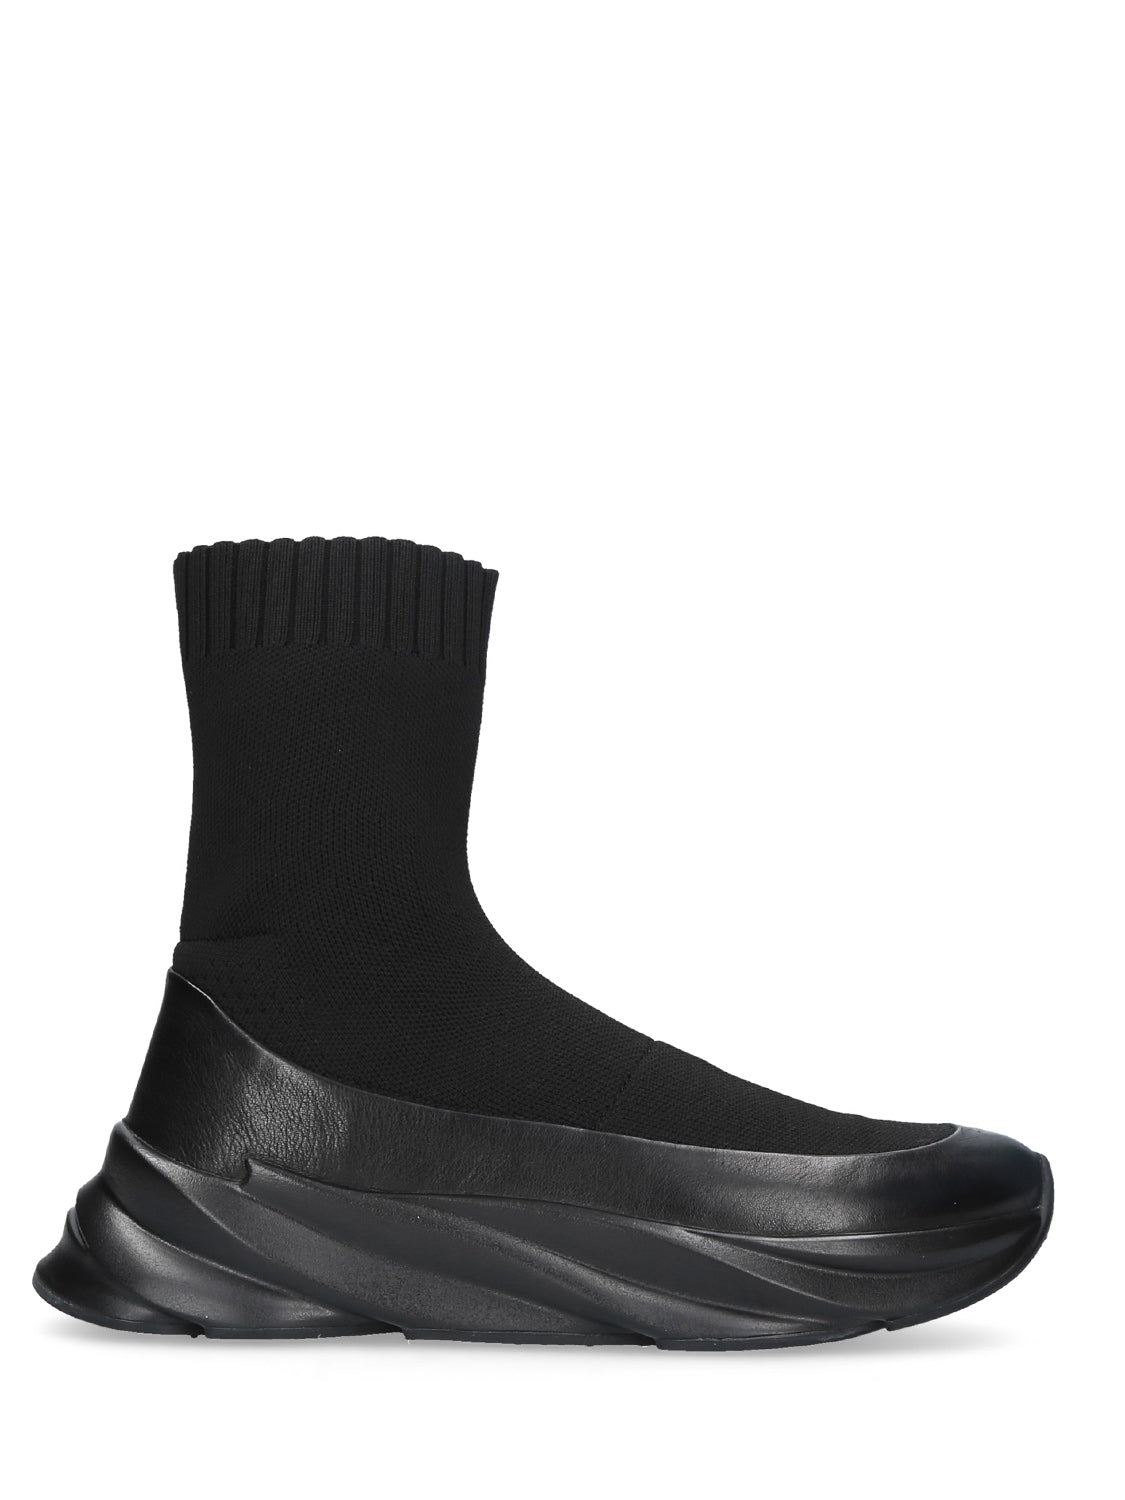 BLACK SOCK SNEAKER COLETTE , 50mm heel oversize ultralight rubber sole -  E2207 - Elena Iachi Shop – Elena Iachi Shoes